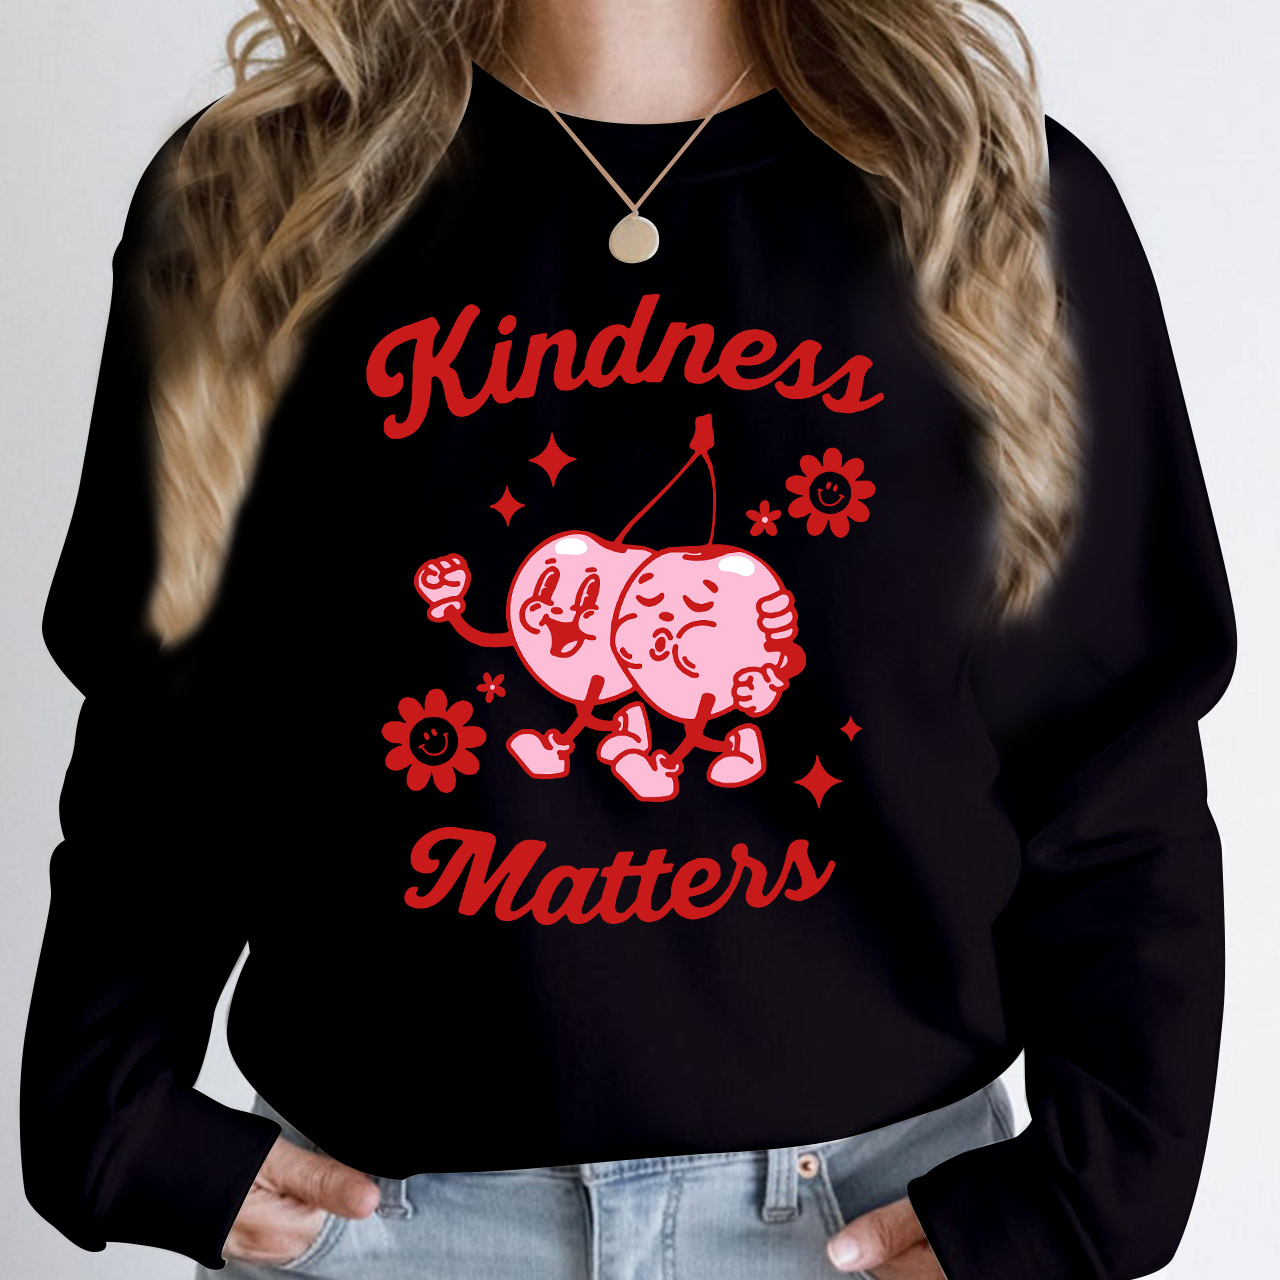 Kindness Matters Retro Sweatshirt